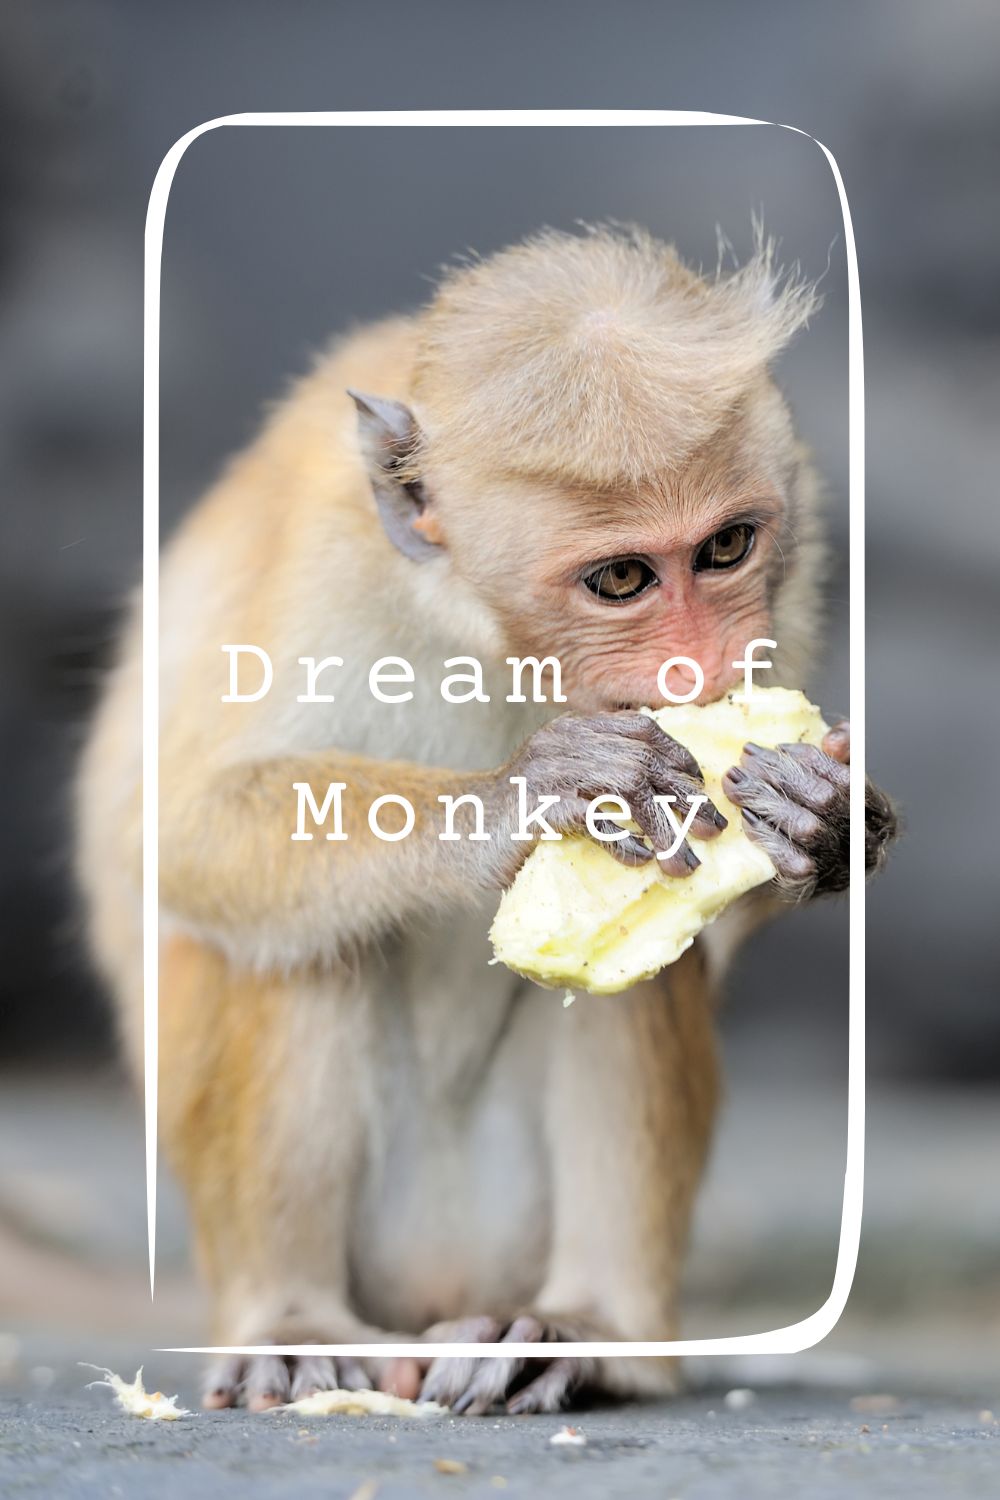 17 Dream of Monkey Meanings1